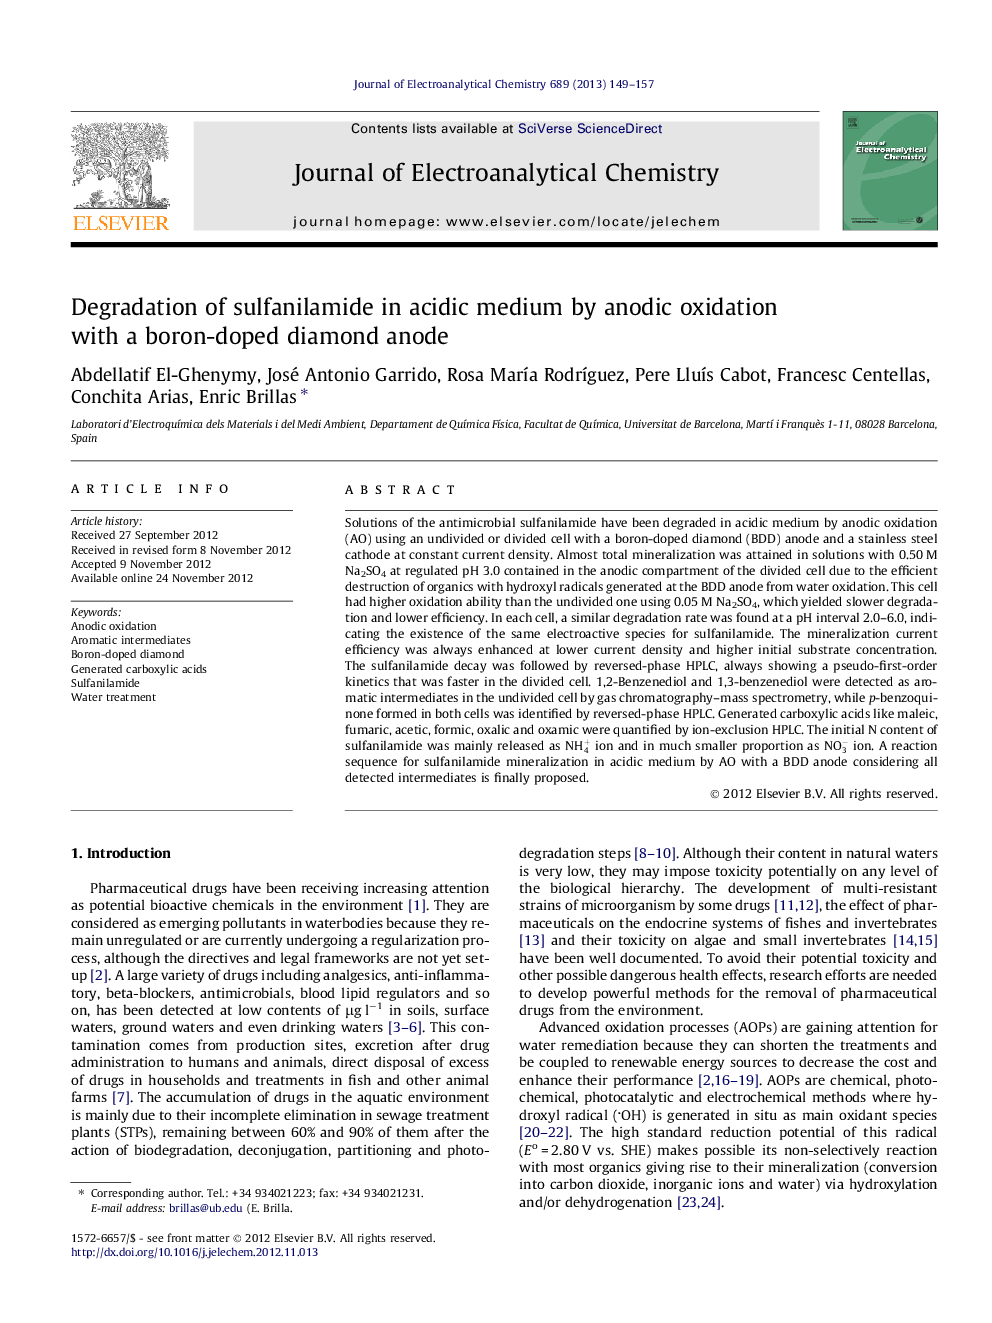 Degradation of sulfanilamide in acidic medium by anodic oxidation with a boron-doped diamond anode